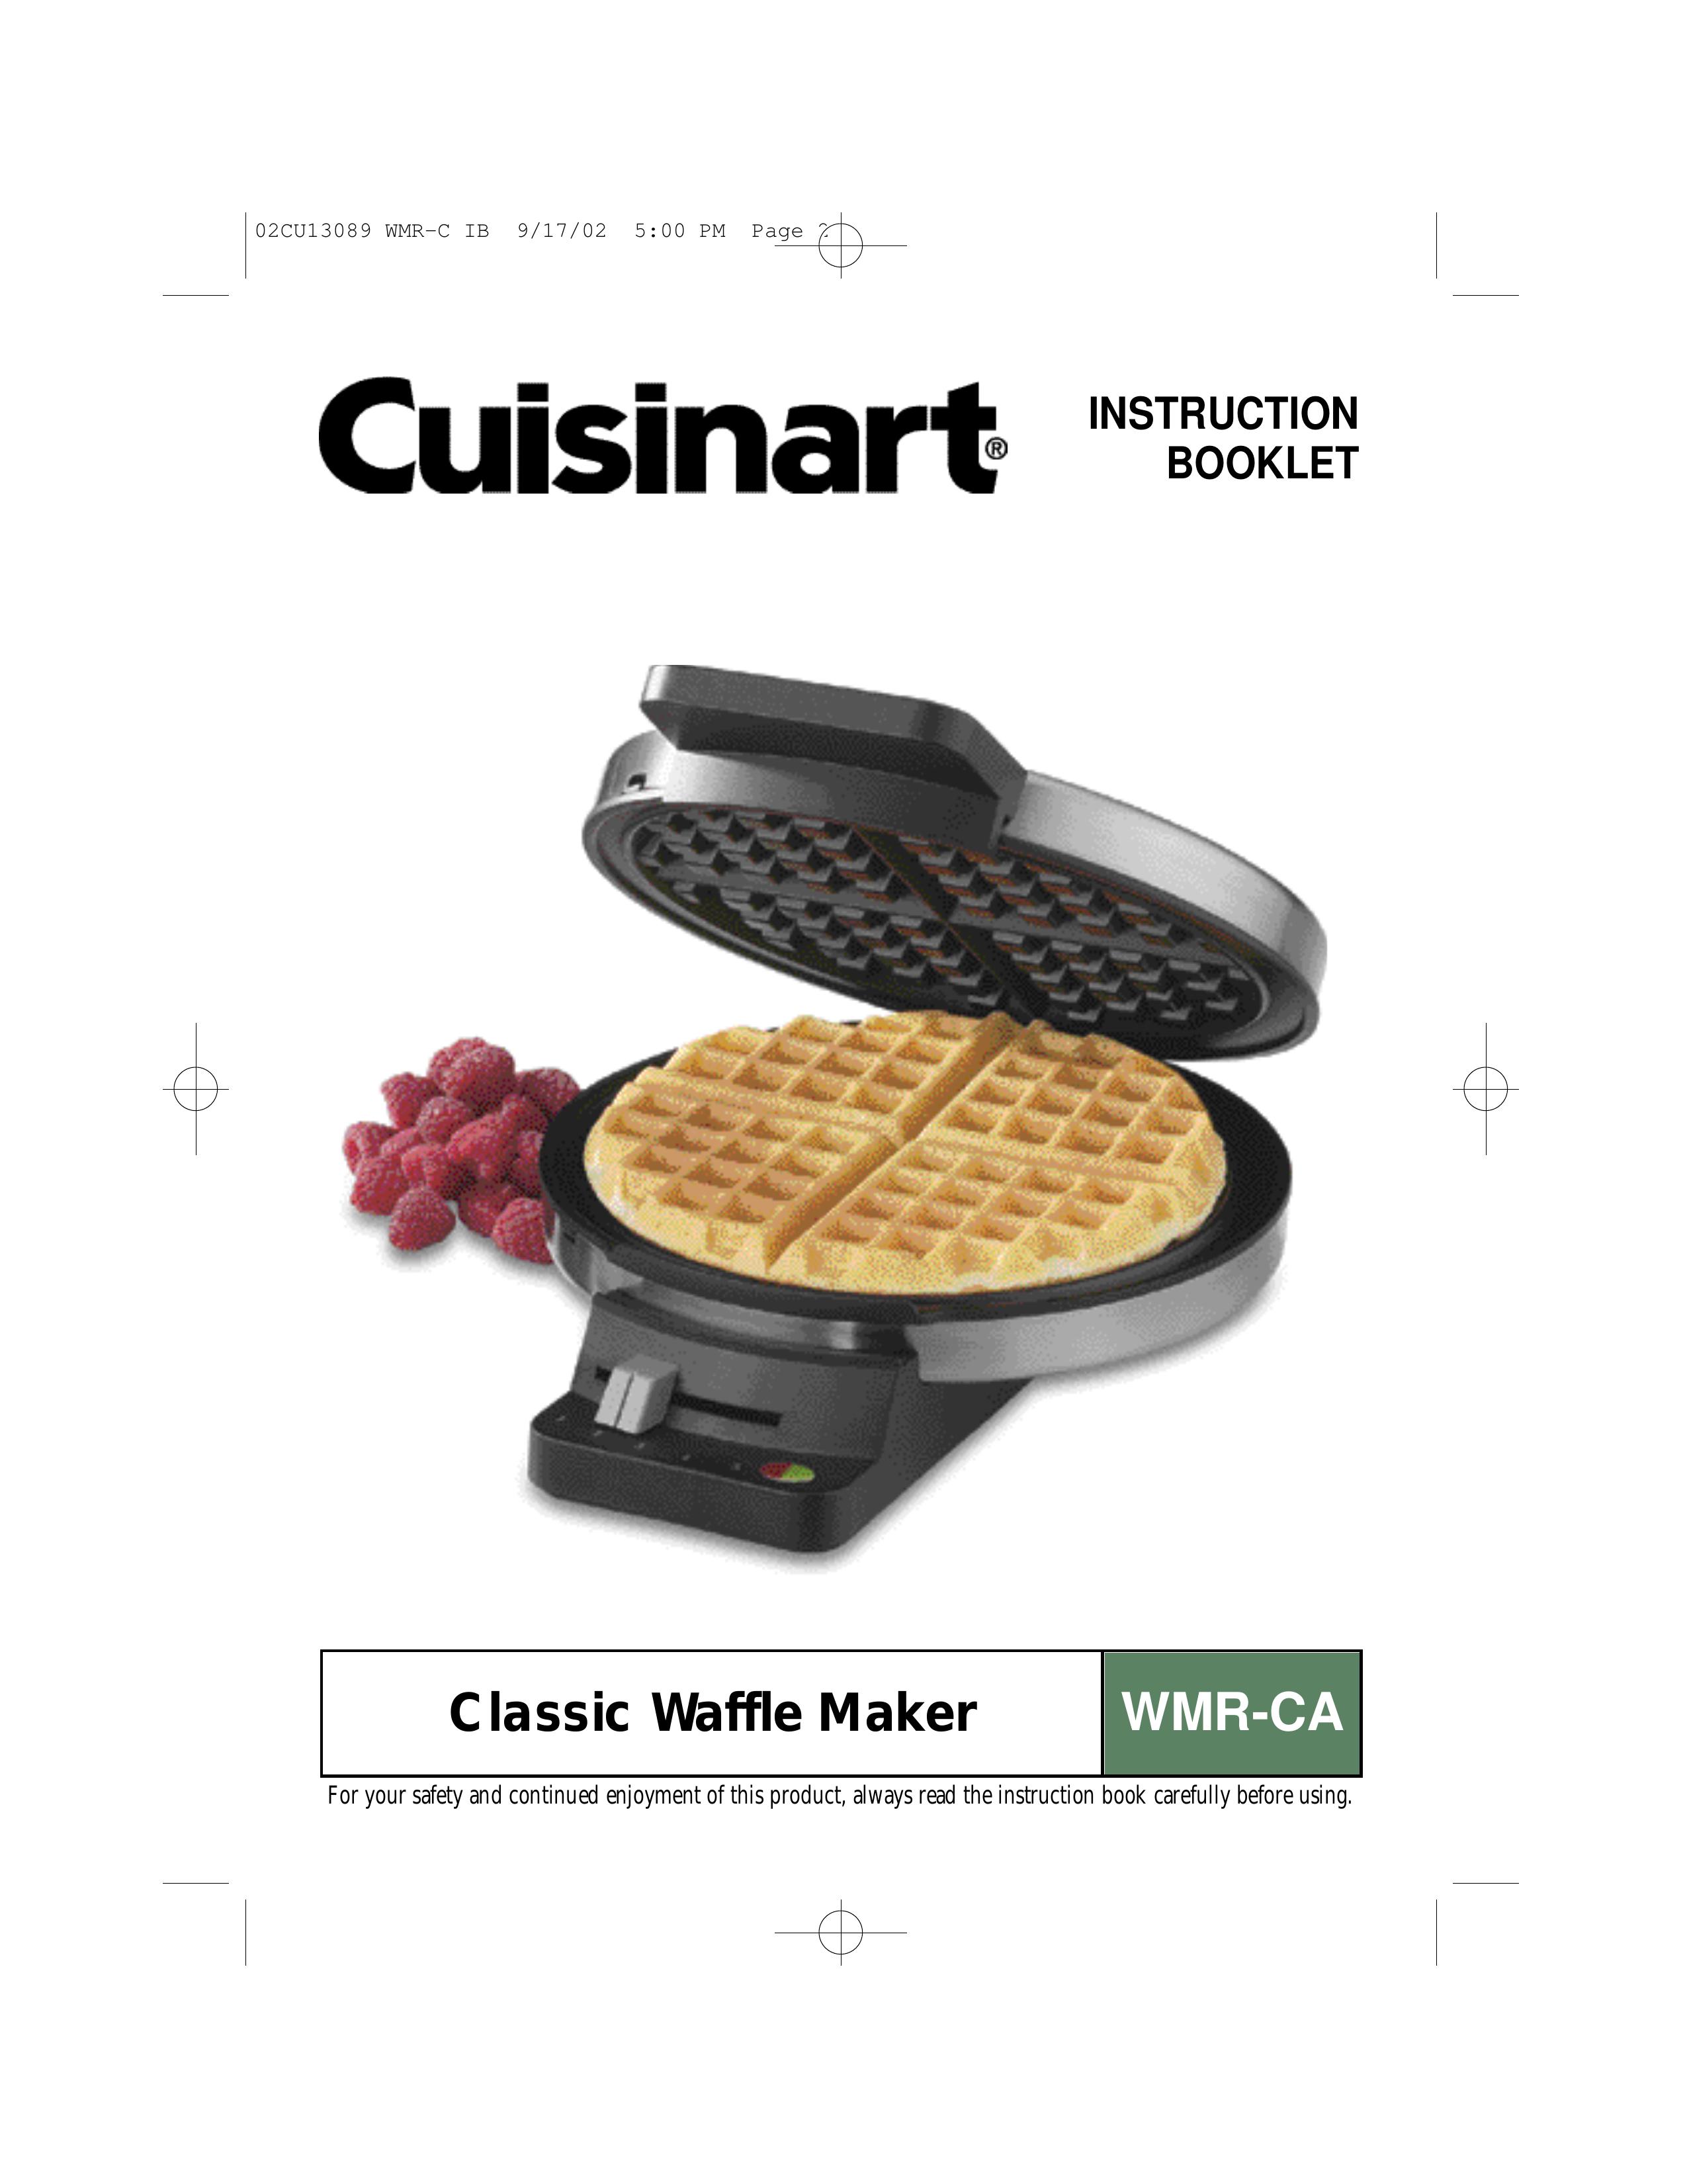 Cuisinart WMR-CA Waffle Iron User Manual